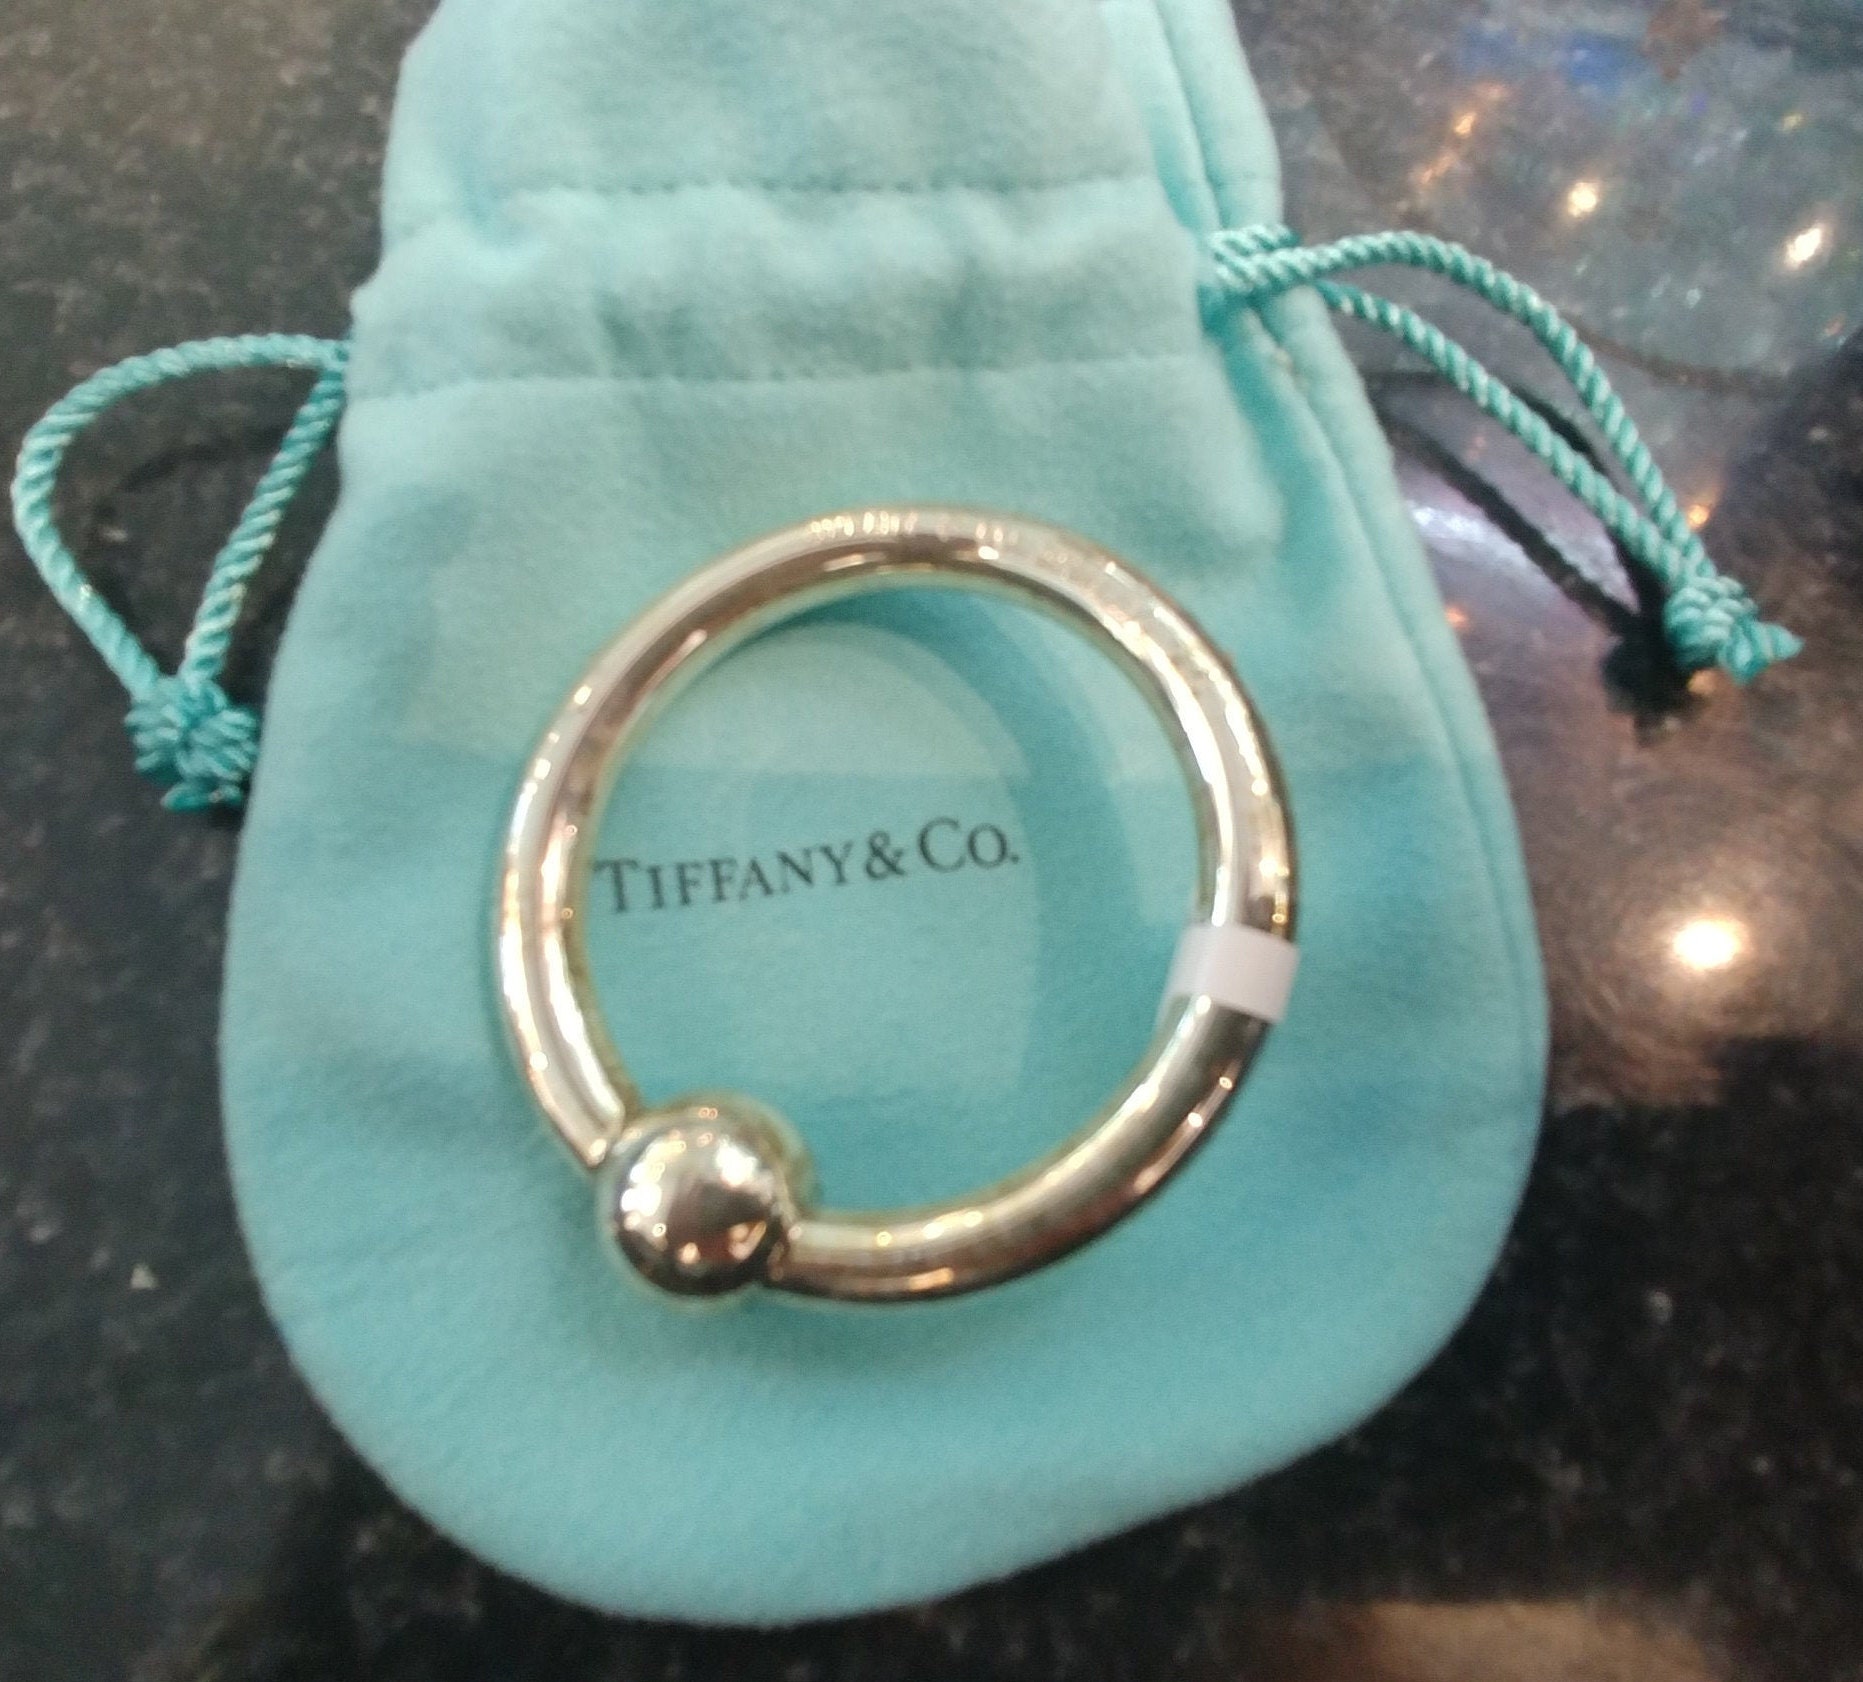 tiffany teething ring